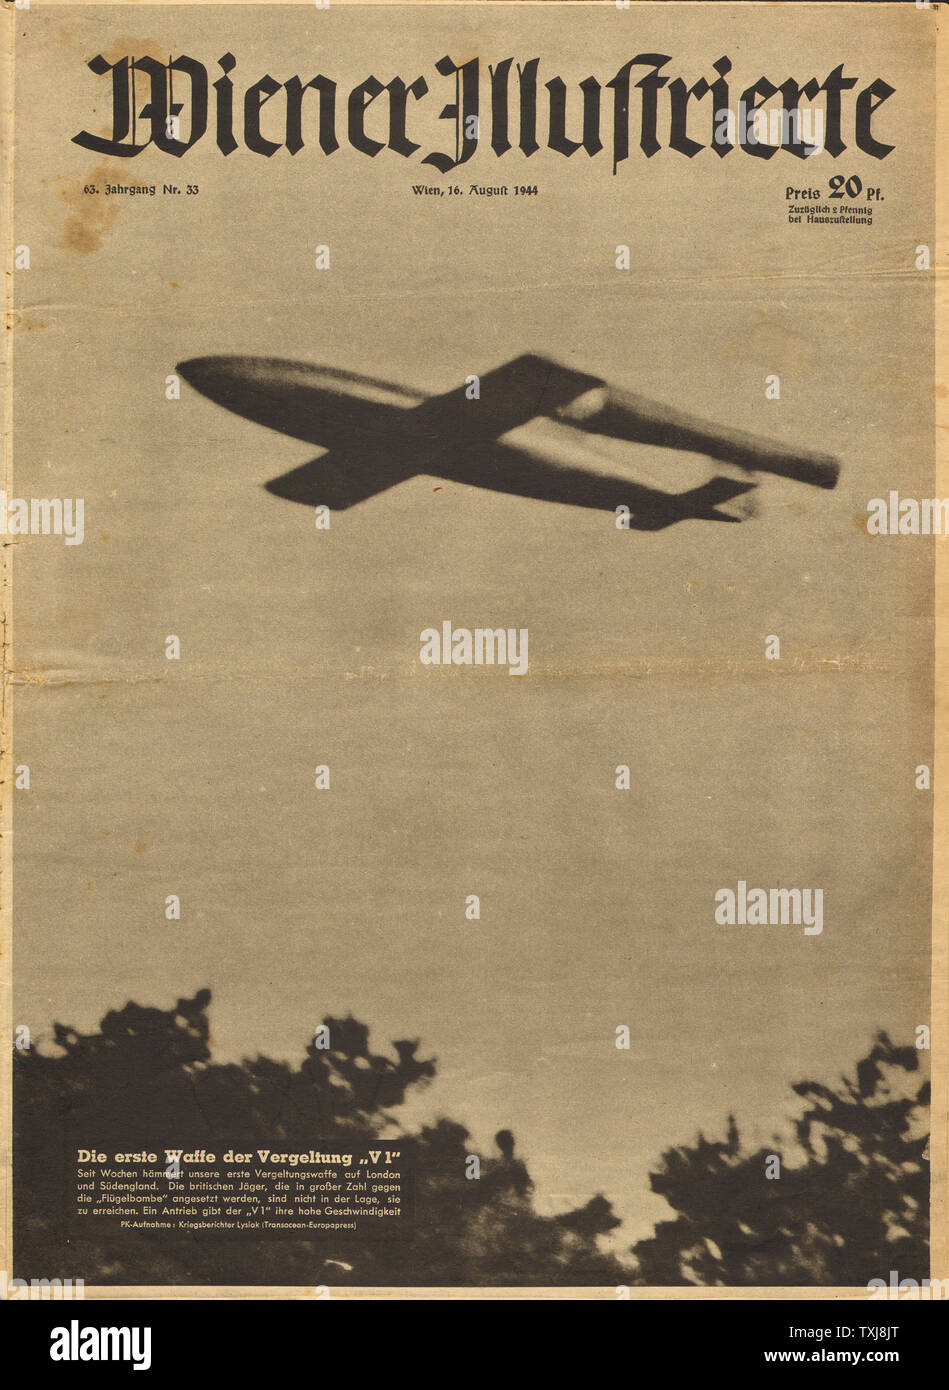 1944 Wiener Illustrierte V1 & V2 rockets Stock Photo